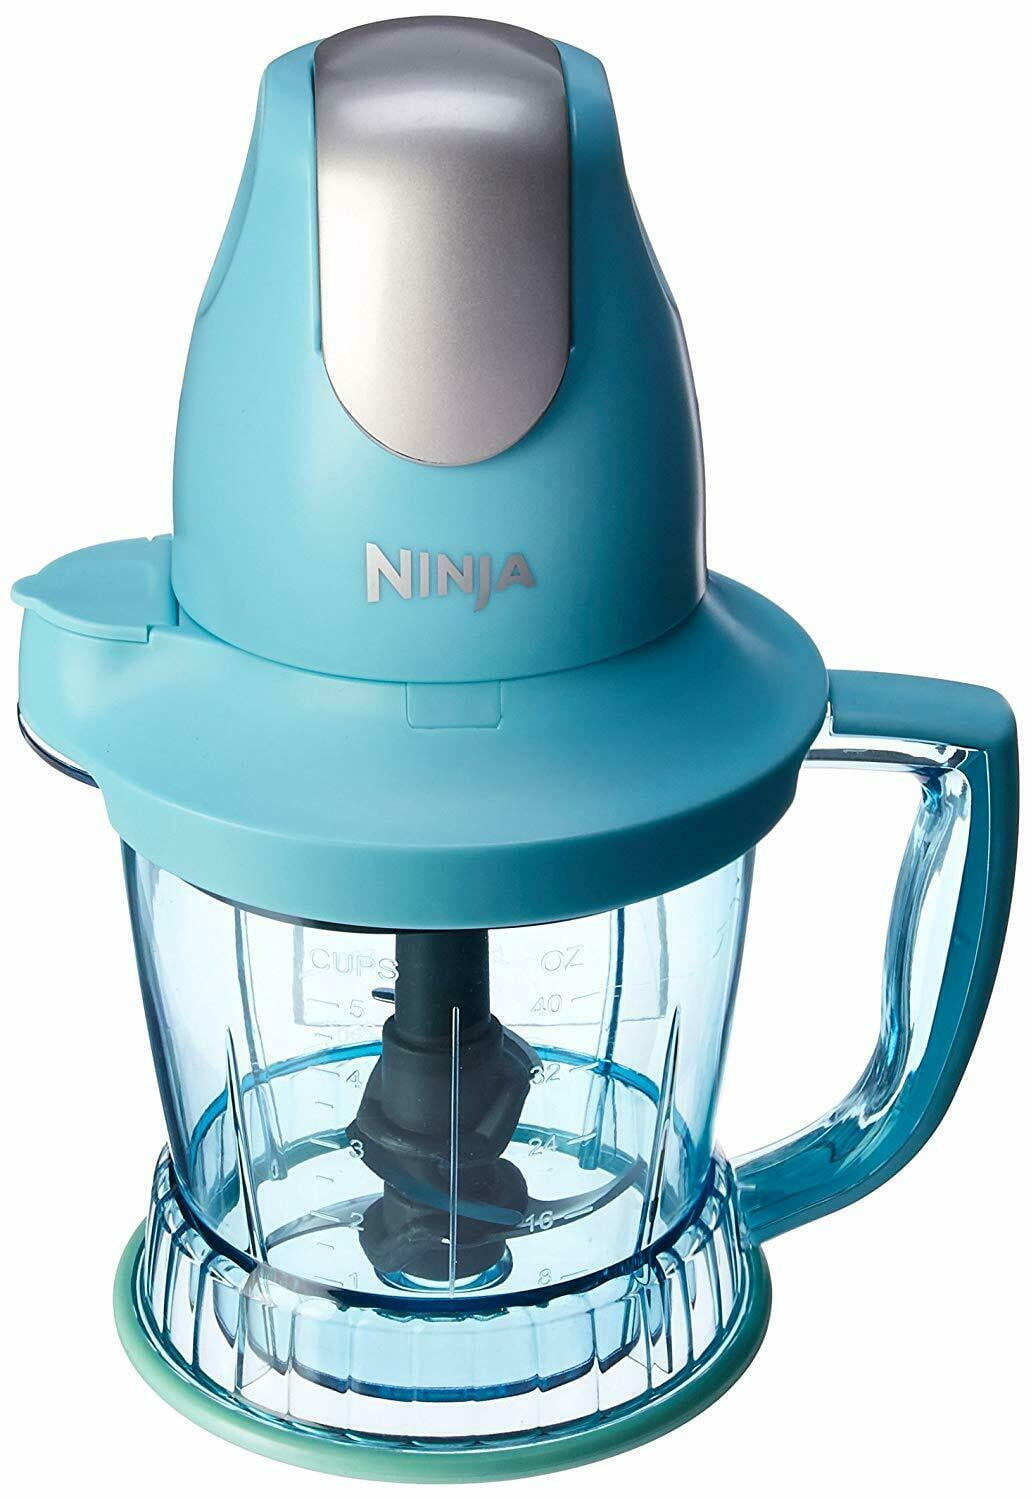 Ninja Storm Blender with 450 Watts Food & Drink Maker/Food